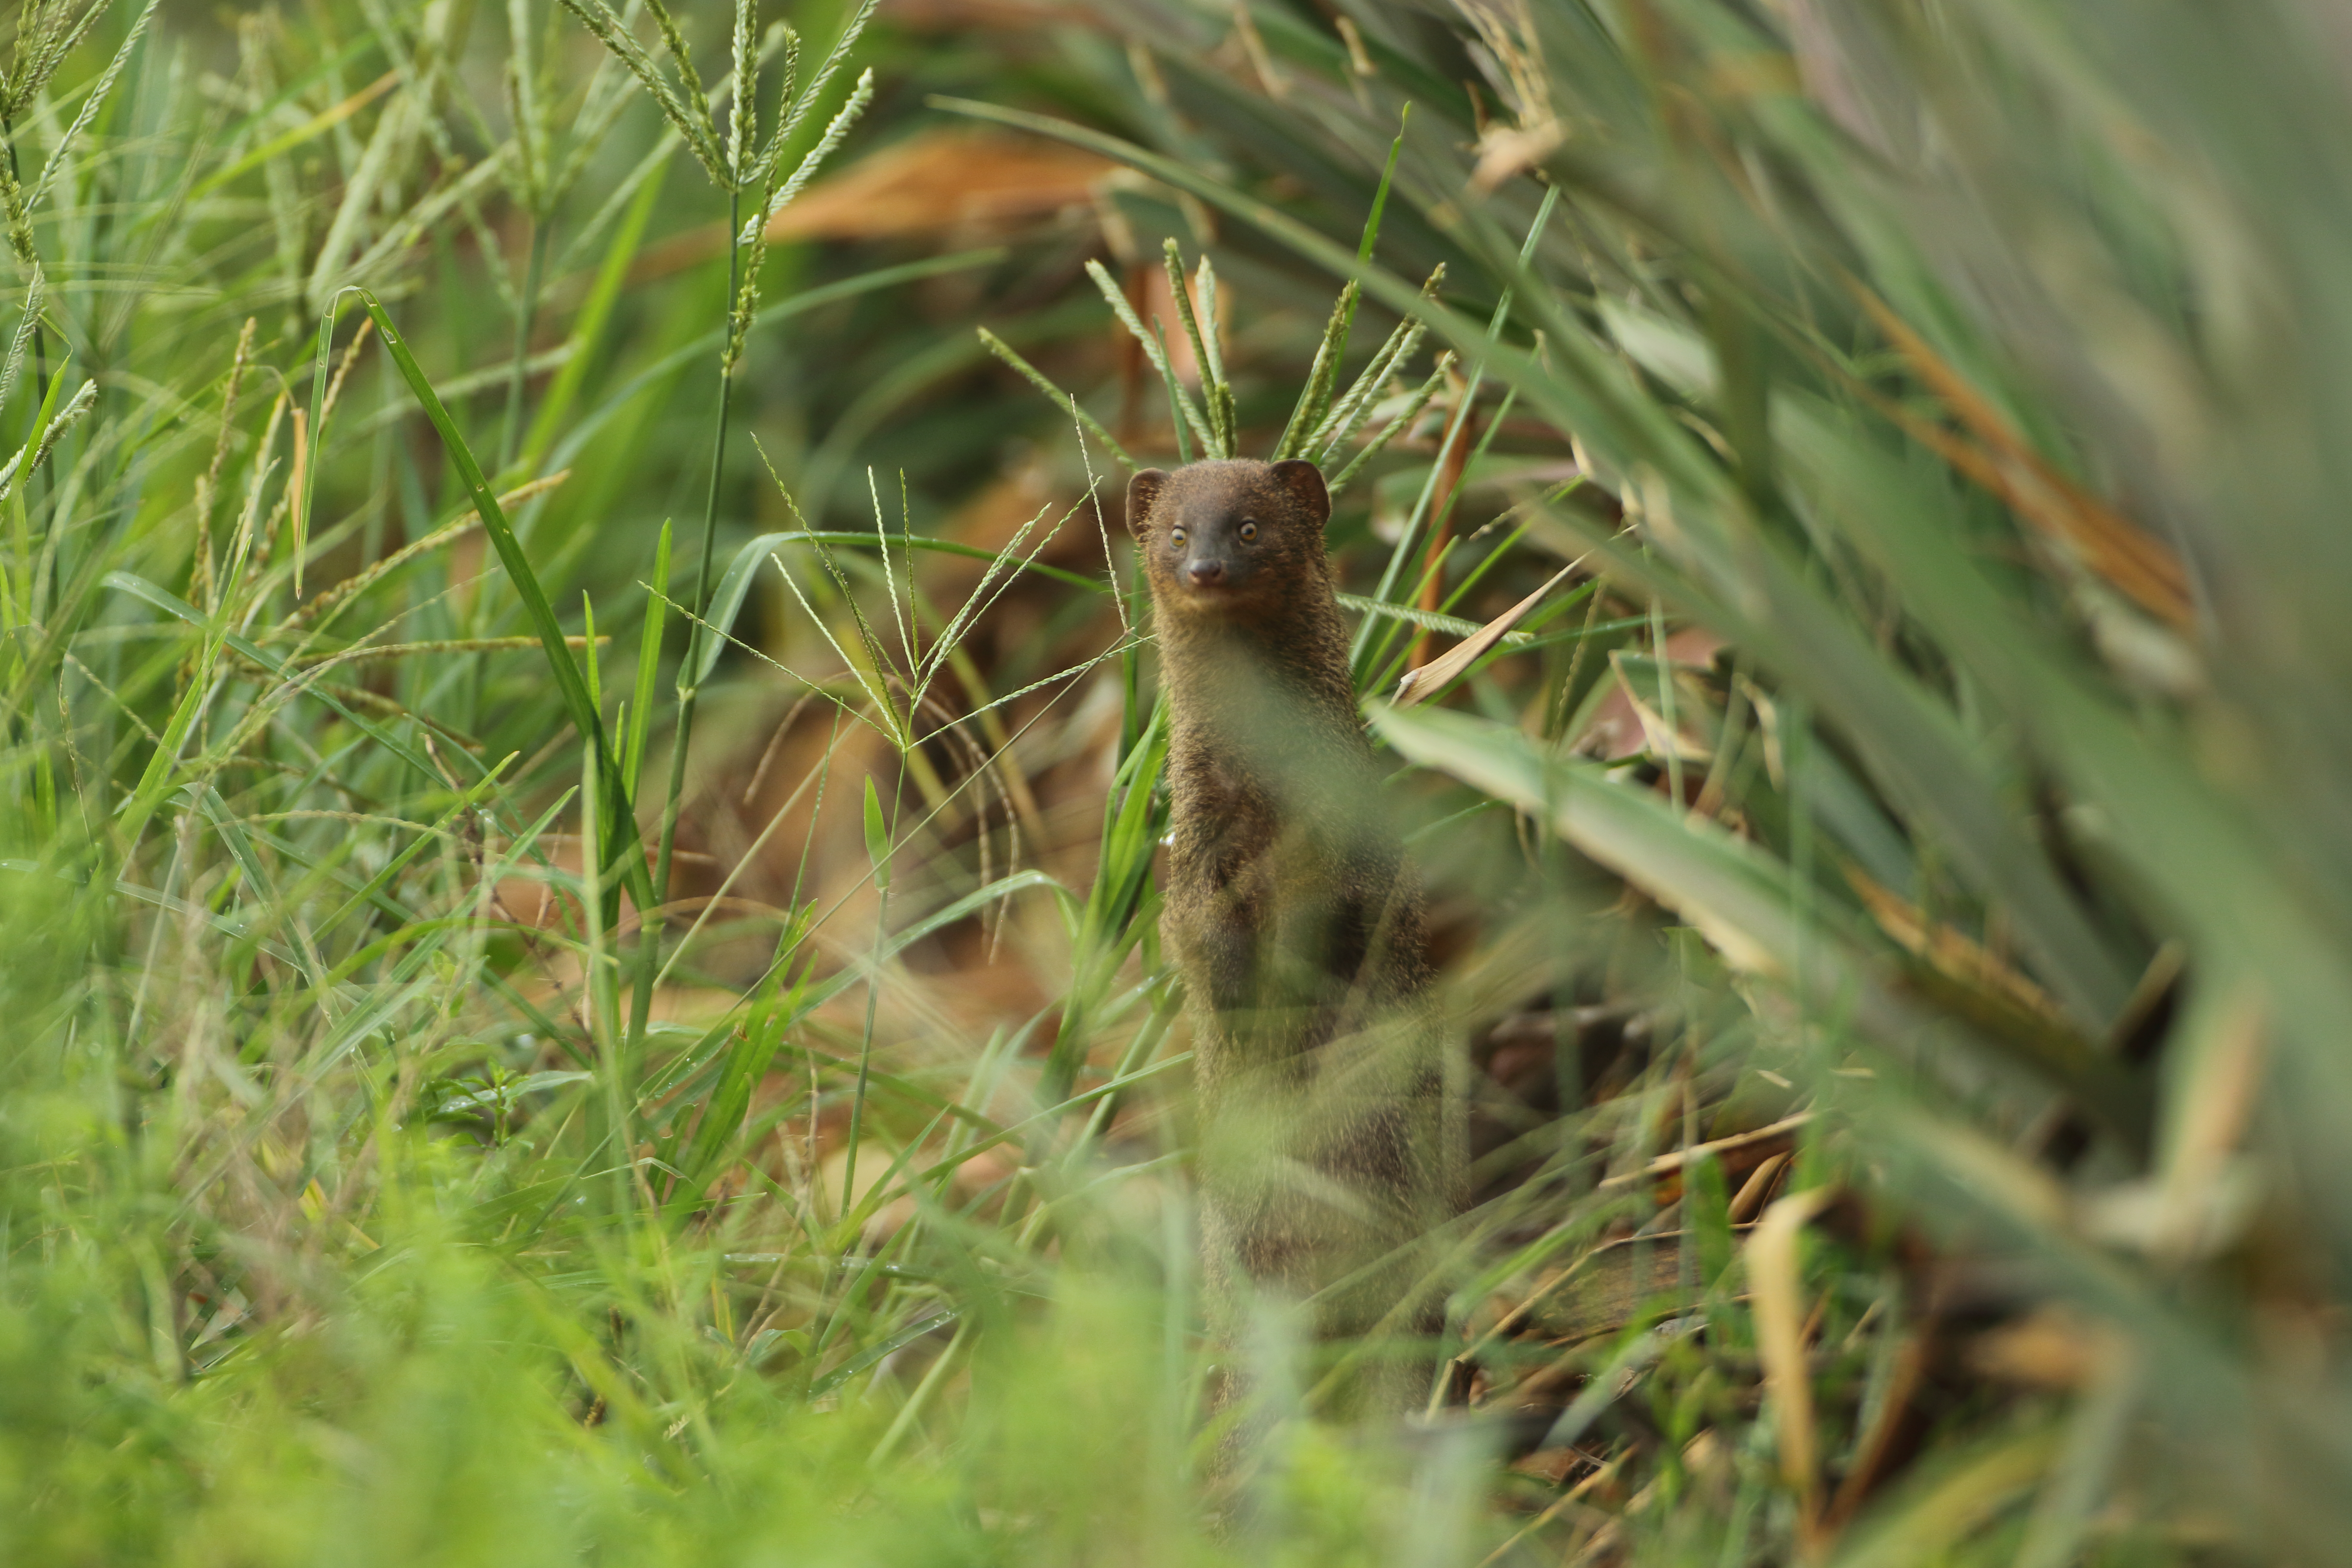 Small Asian Mongoose - Herpestes javanicus